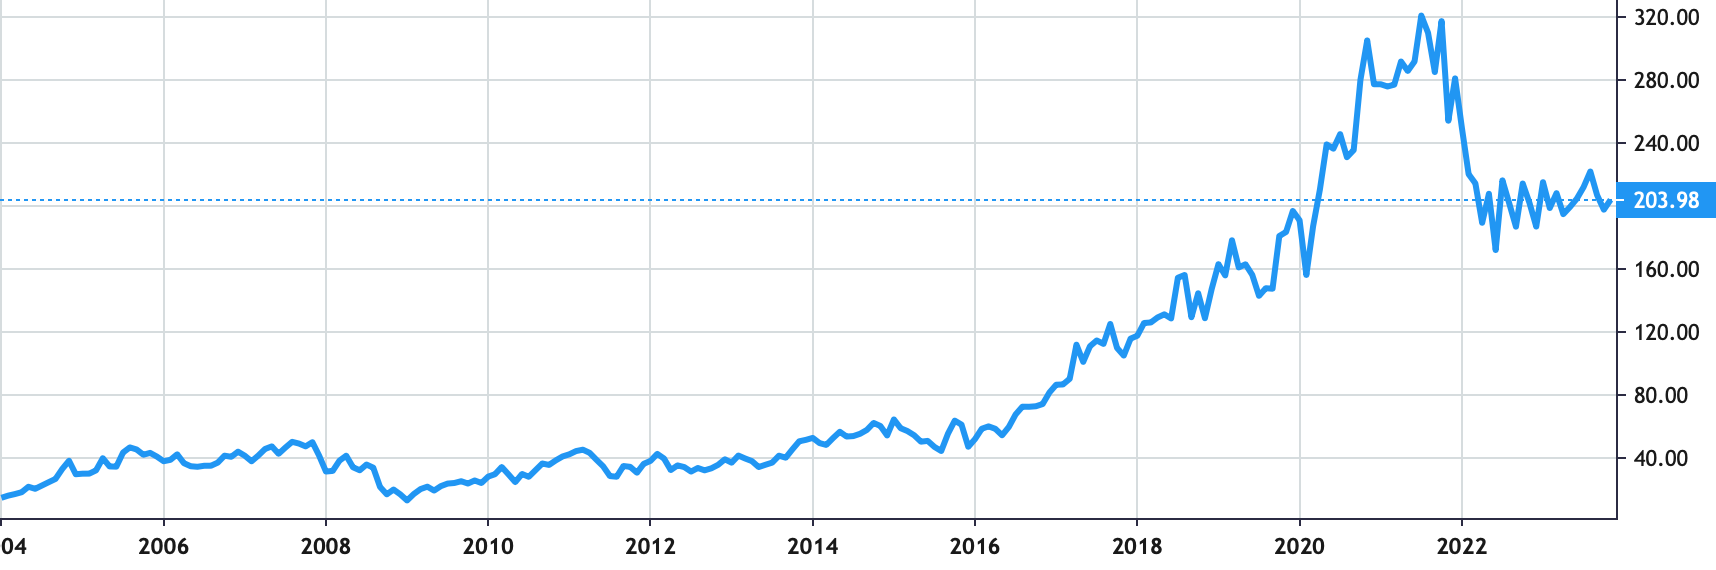 Autodesk Inc share price history